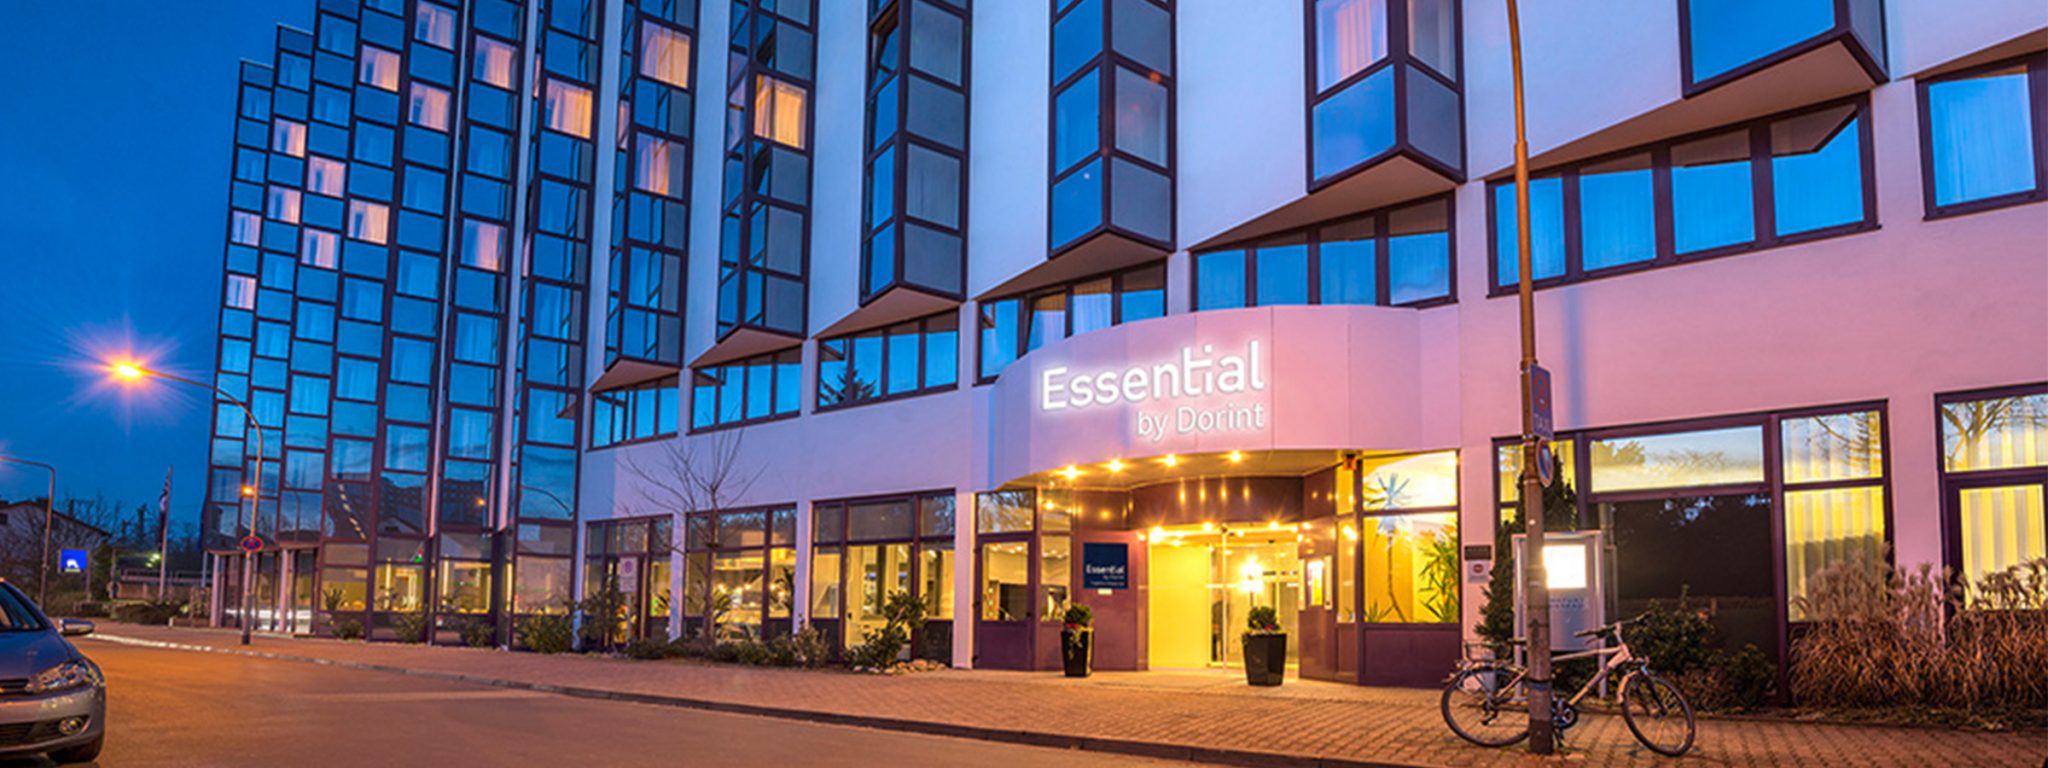 Hotel Essential by Dorint Frankfurt-Niederrad